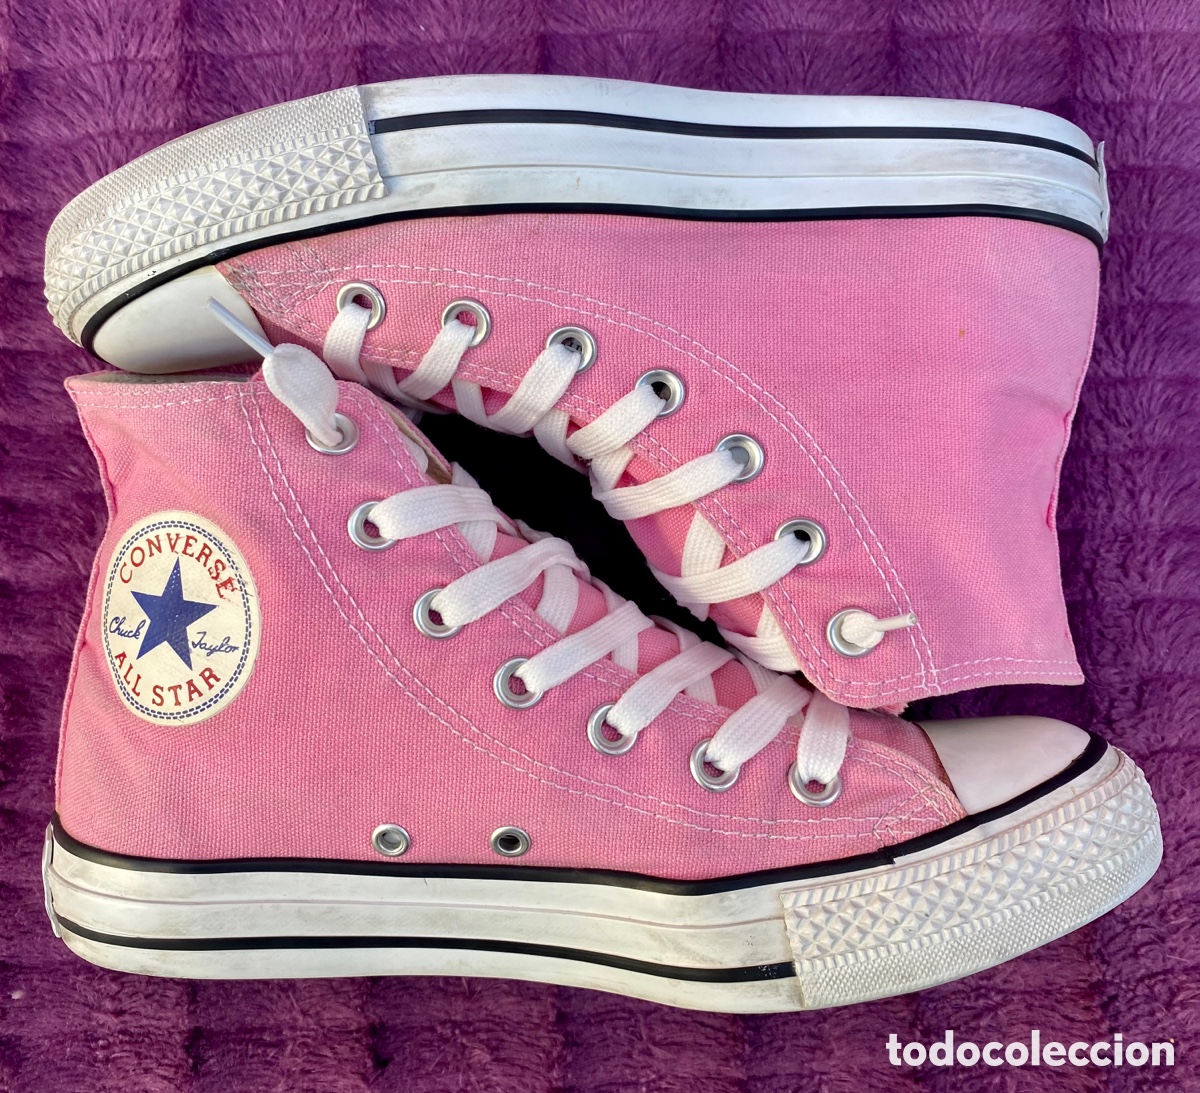 converse. zapatillas converse all star - Buy Second-hand clothing and accessories todocoleccion